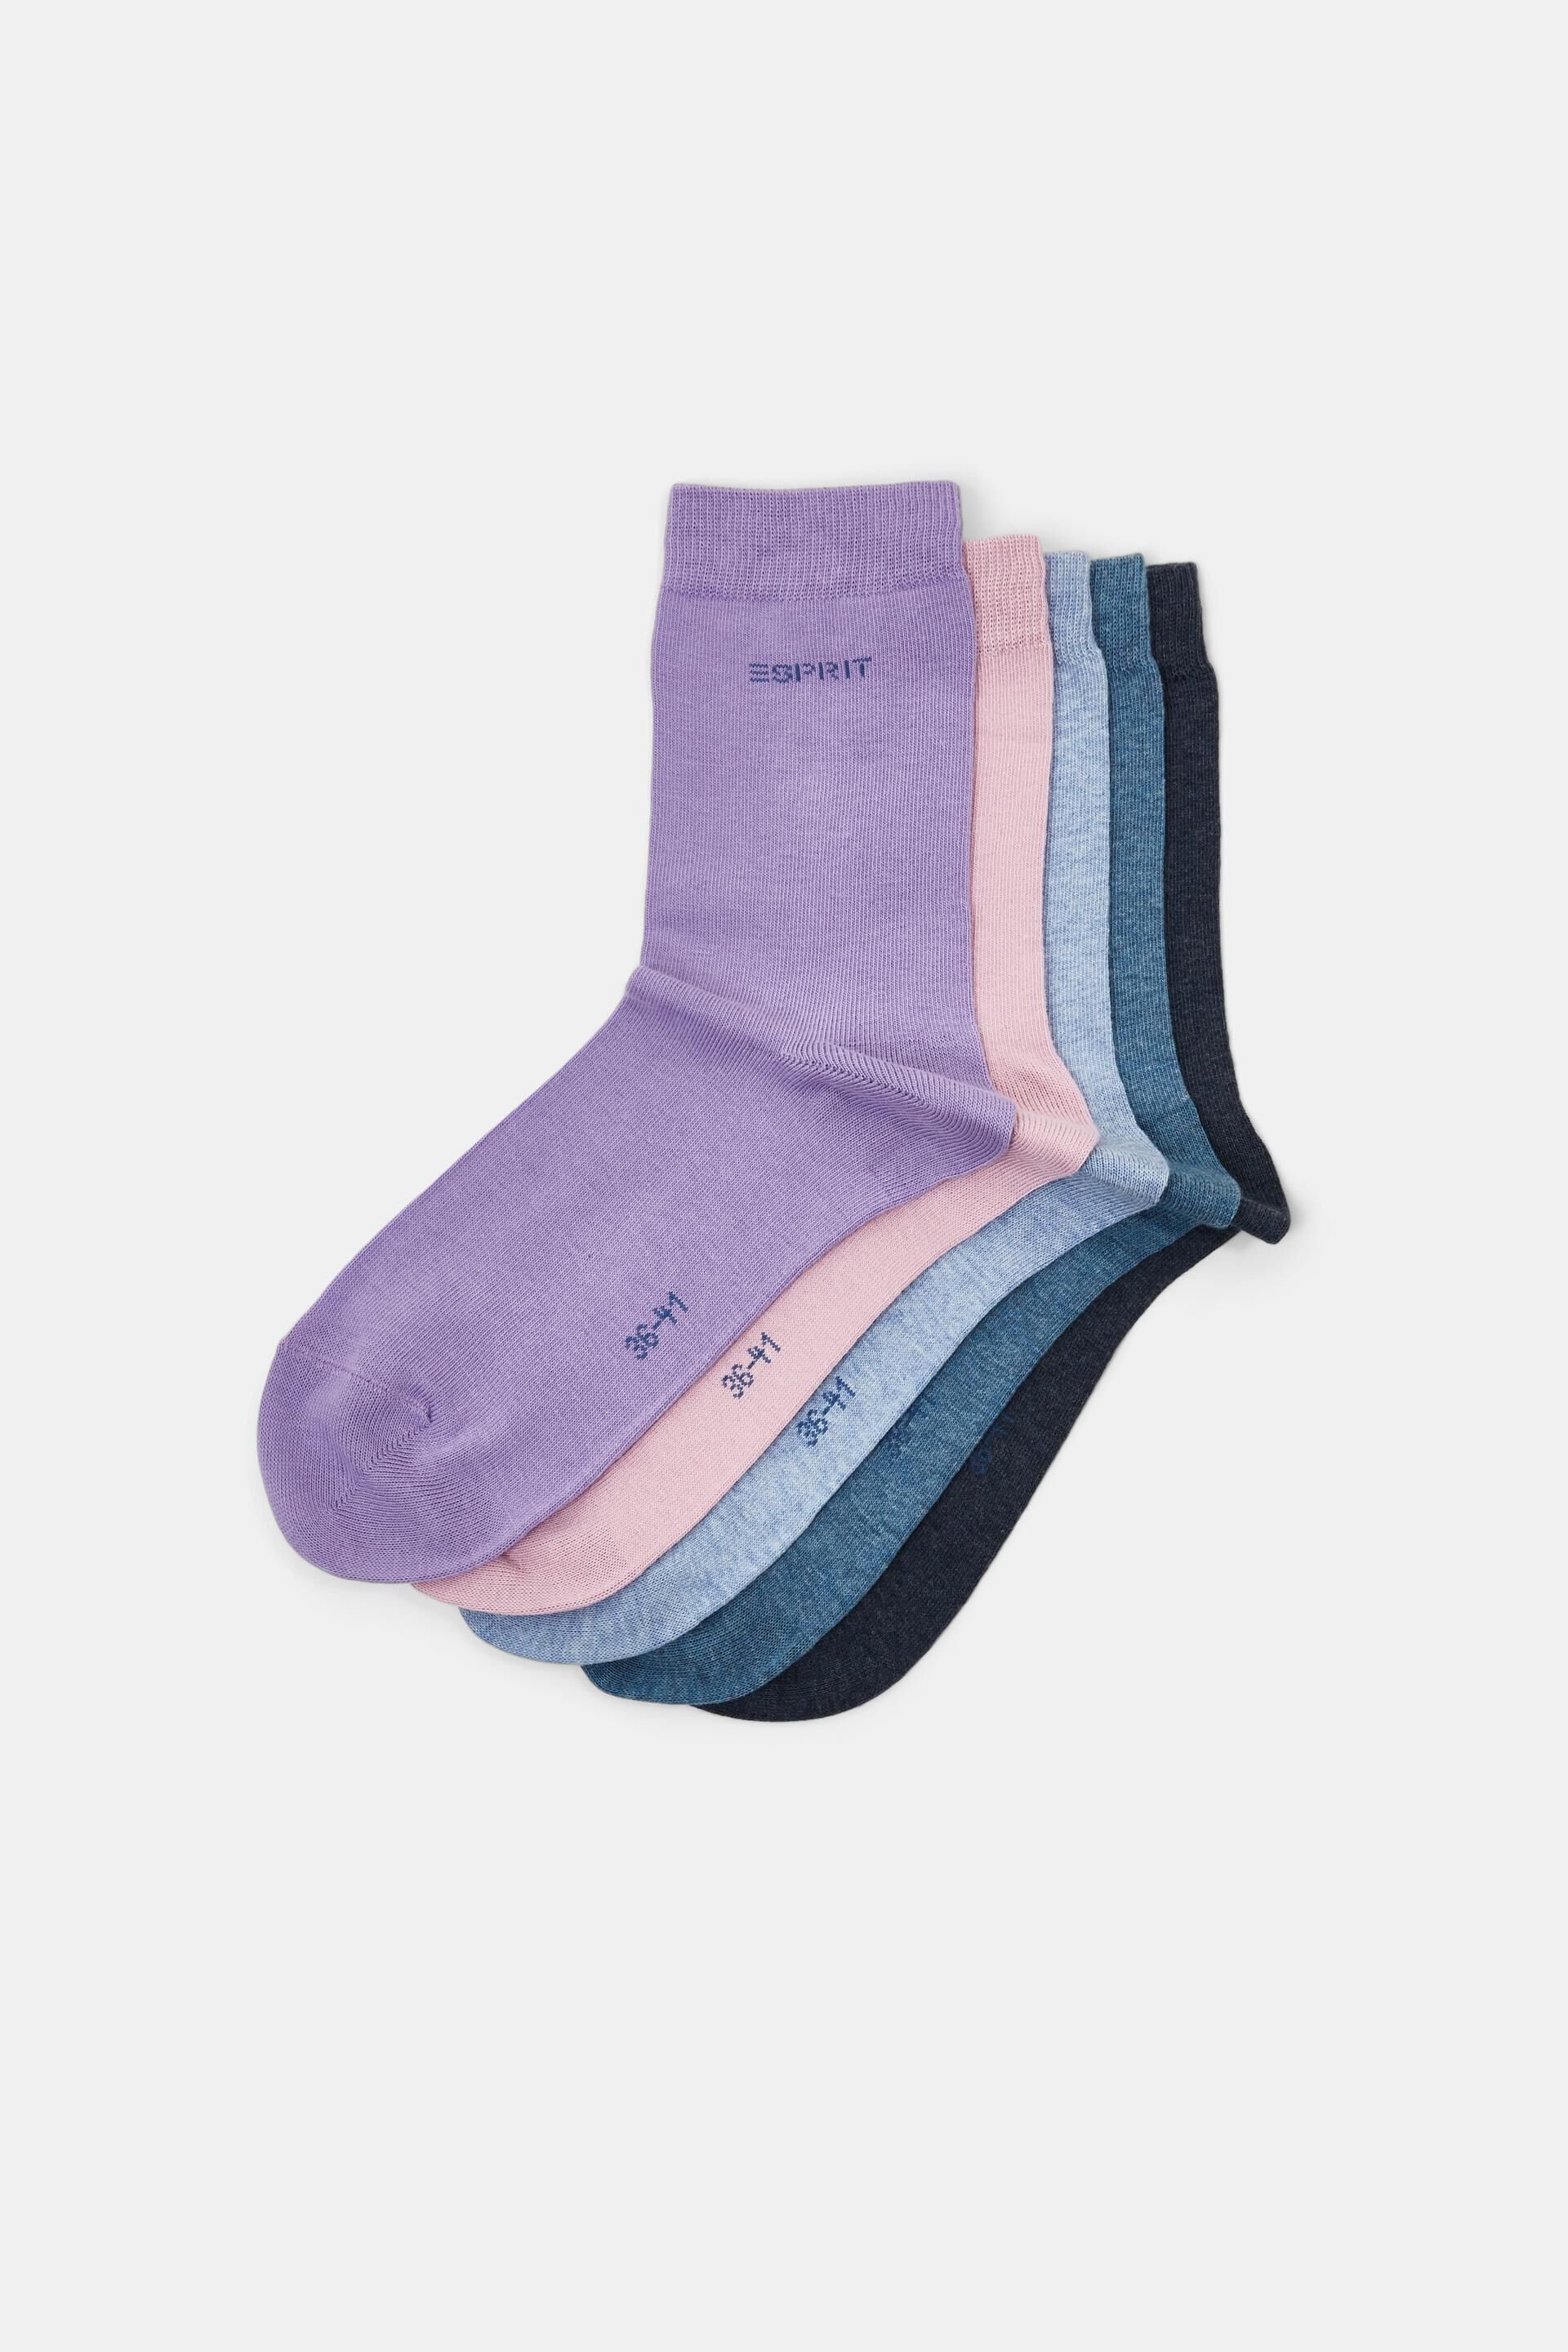 Esprit socks, cotton of organic 5-pack